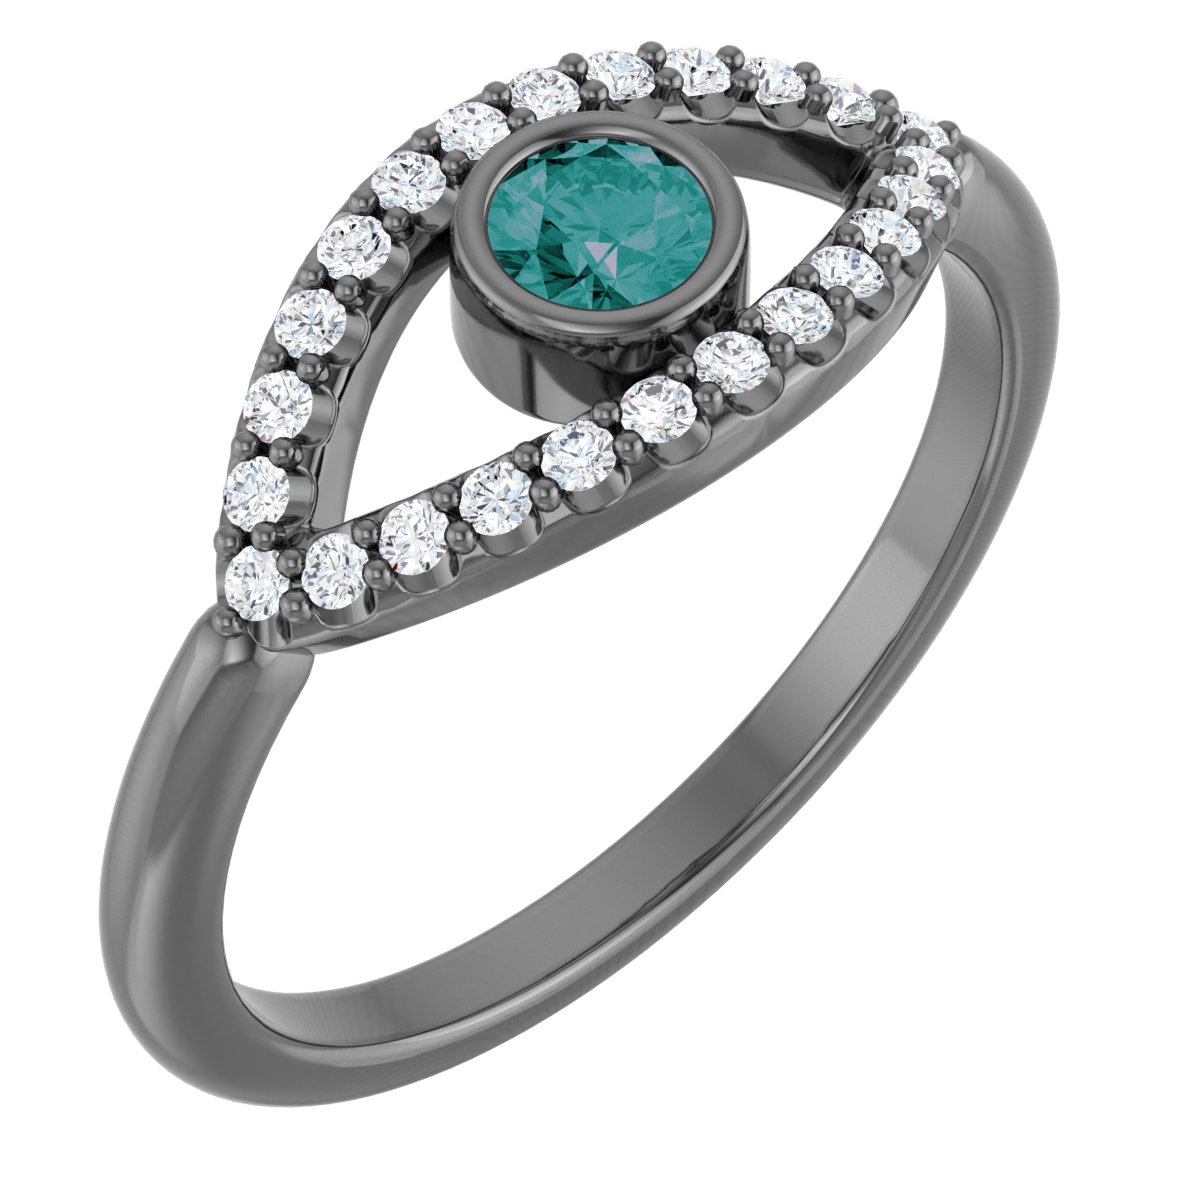 Sterling Silver Alexandrite and White Sapphire Evil Eye Ring Ref 15153707